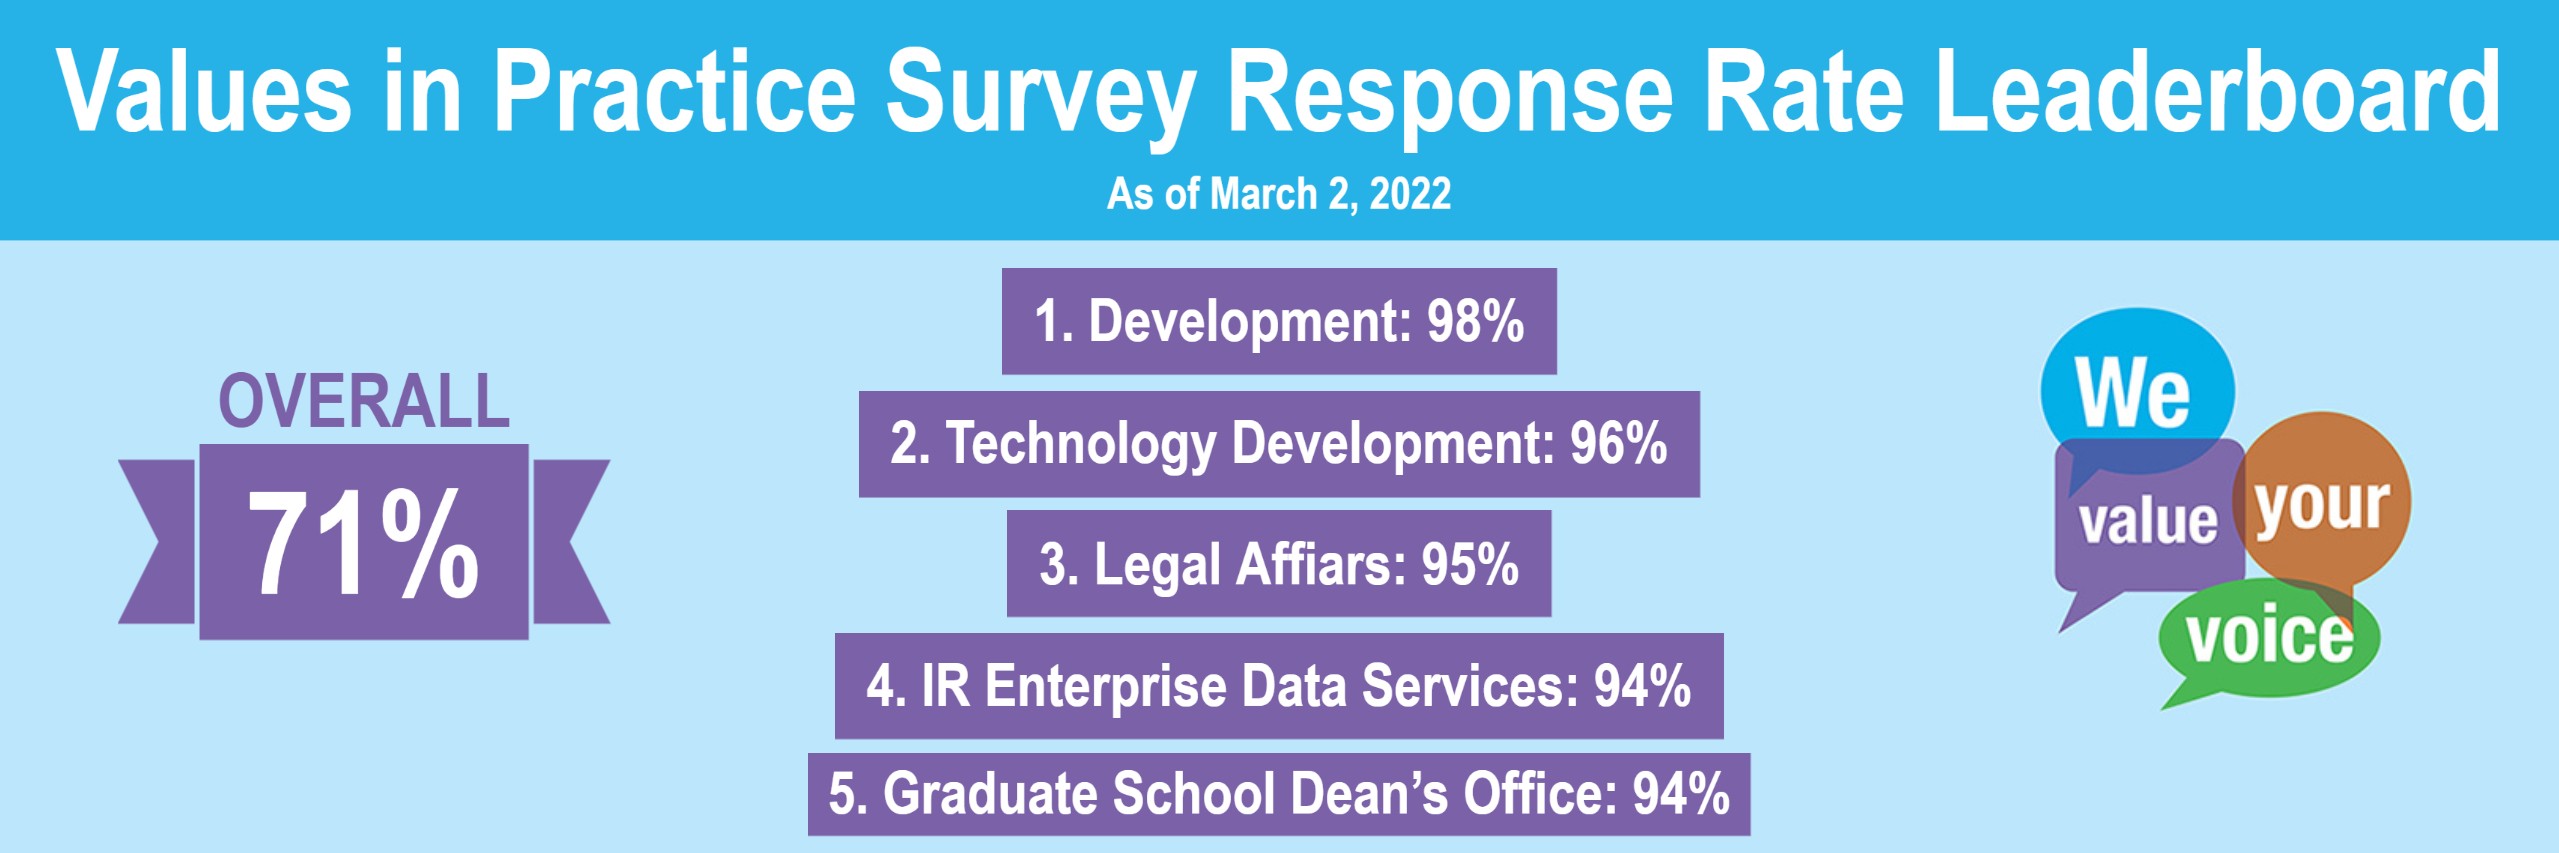 VIP survey department response rates 3.2.2022